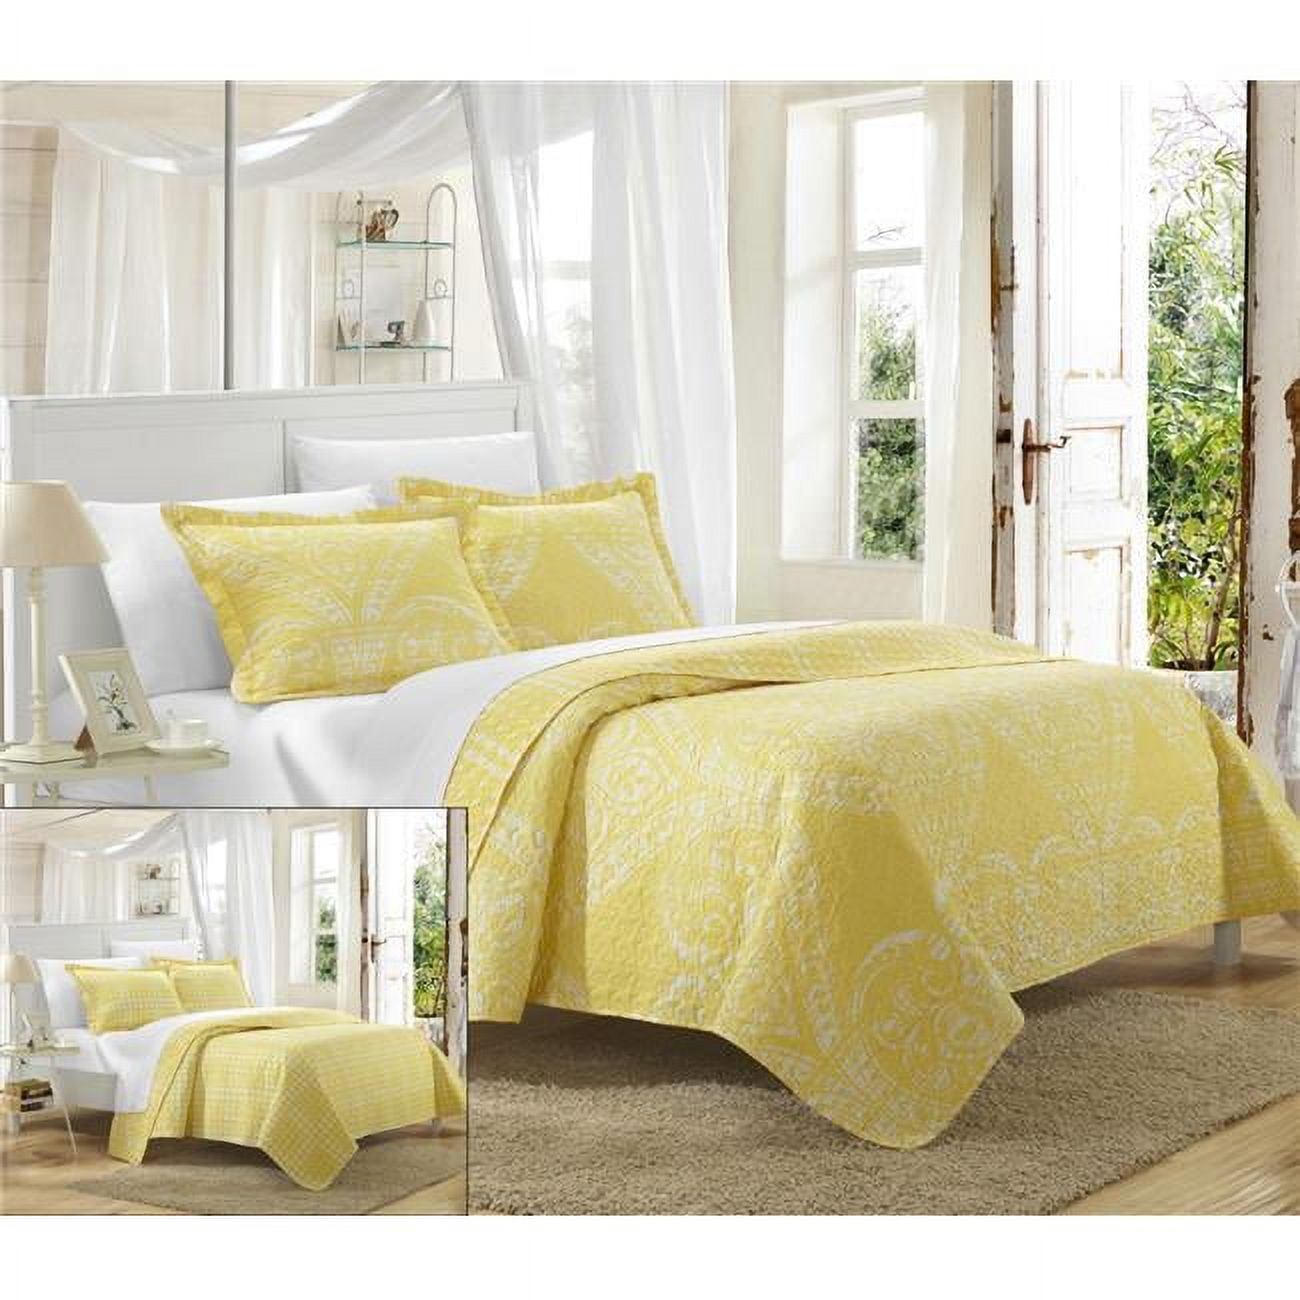 Qs3422-us Pastola Reversible Printed Quilt Quilt Set - Yellow - Queen - 3 Piece